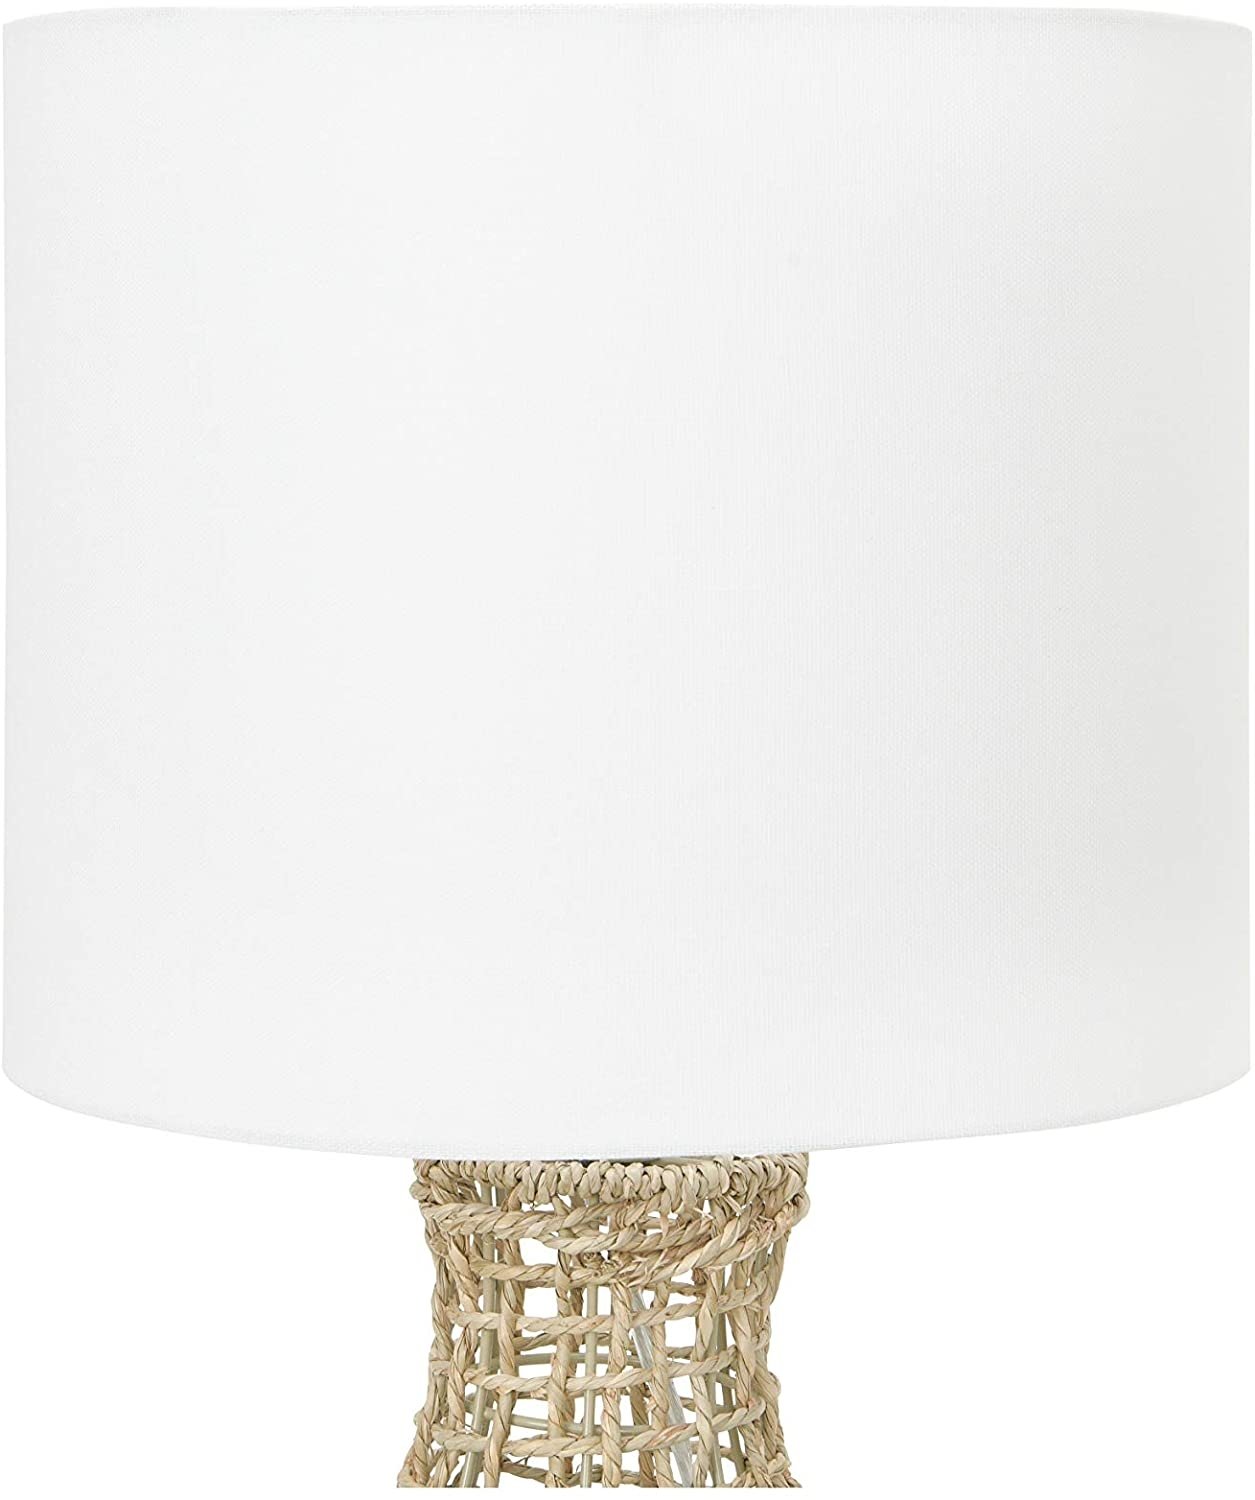 Curvy Rattan Table Lamp - Image 5